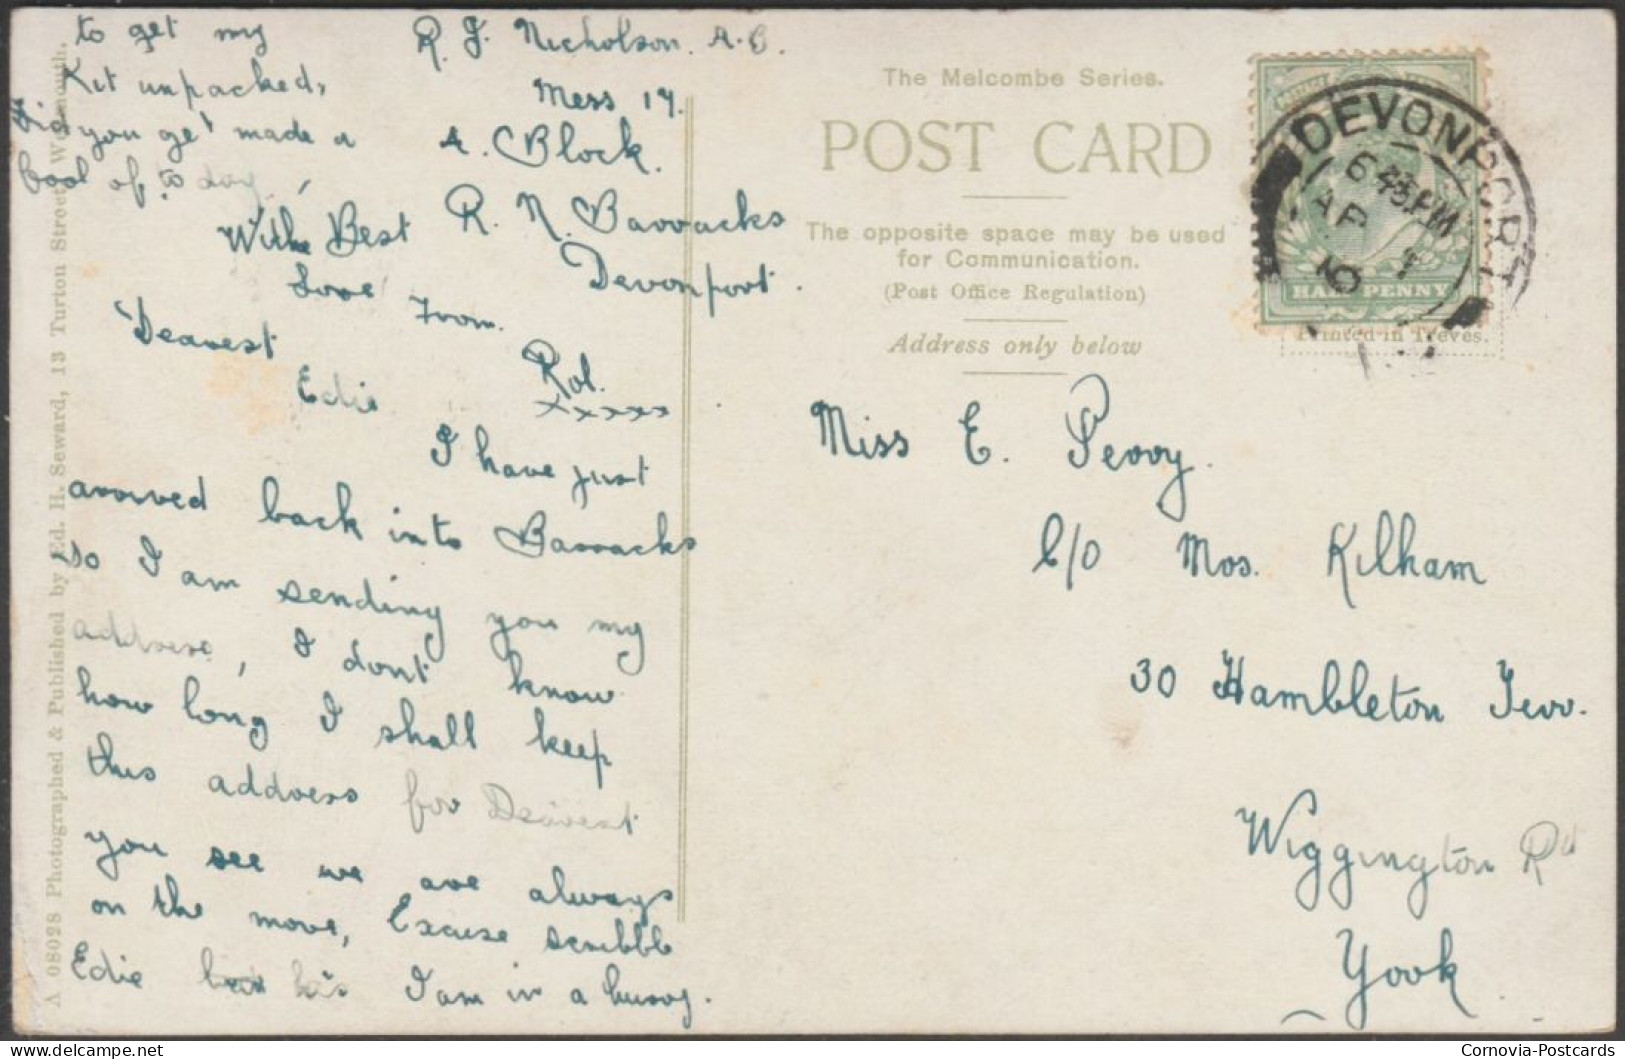 Alexander Gardens, Weymouth, Dorset, 1910 - Seward Postcard - Weymouth